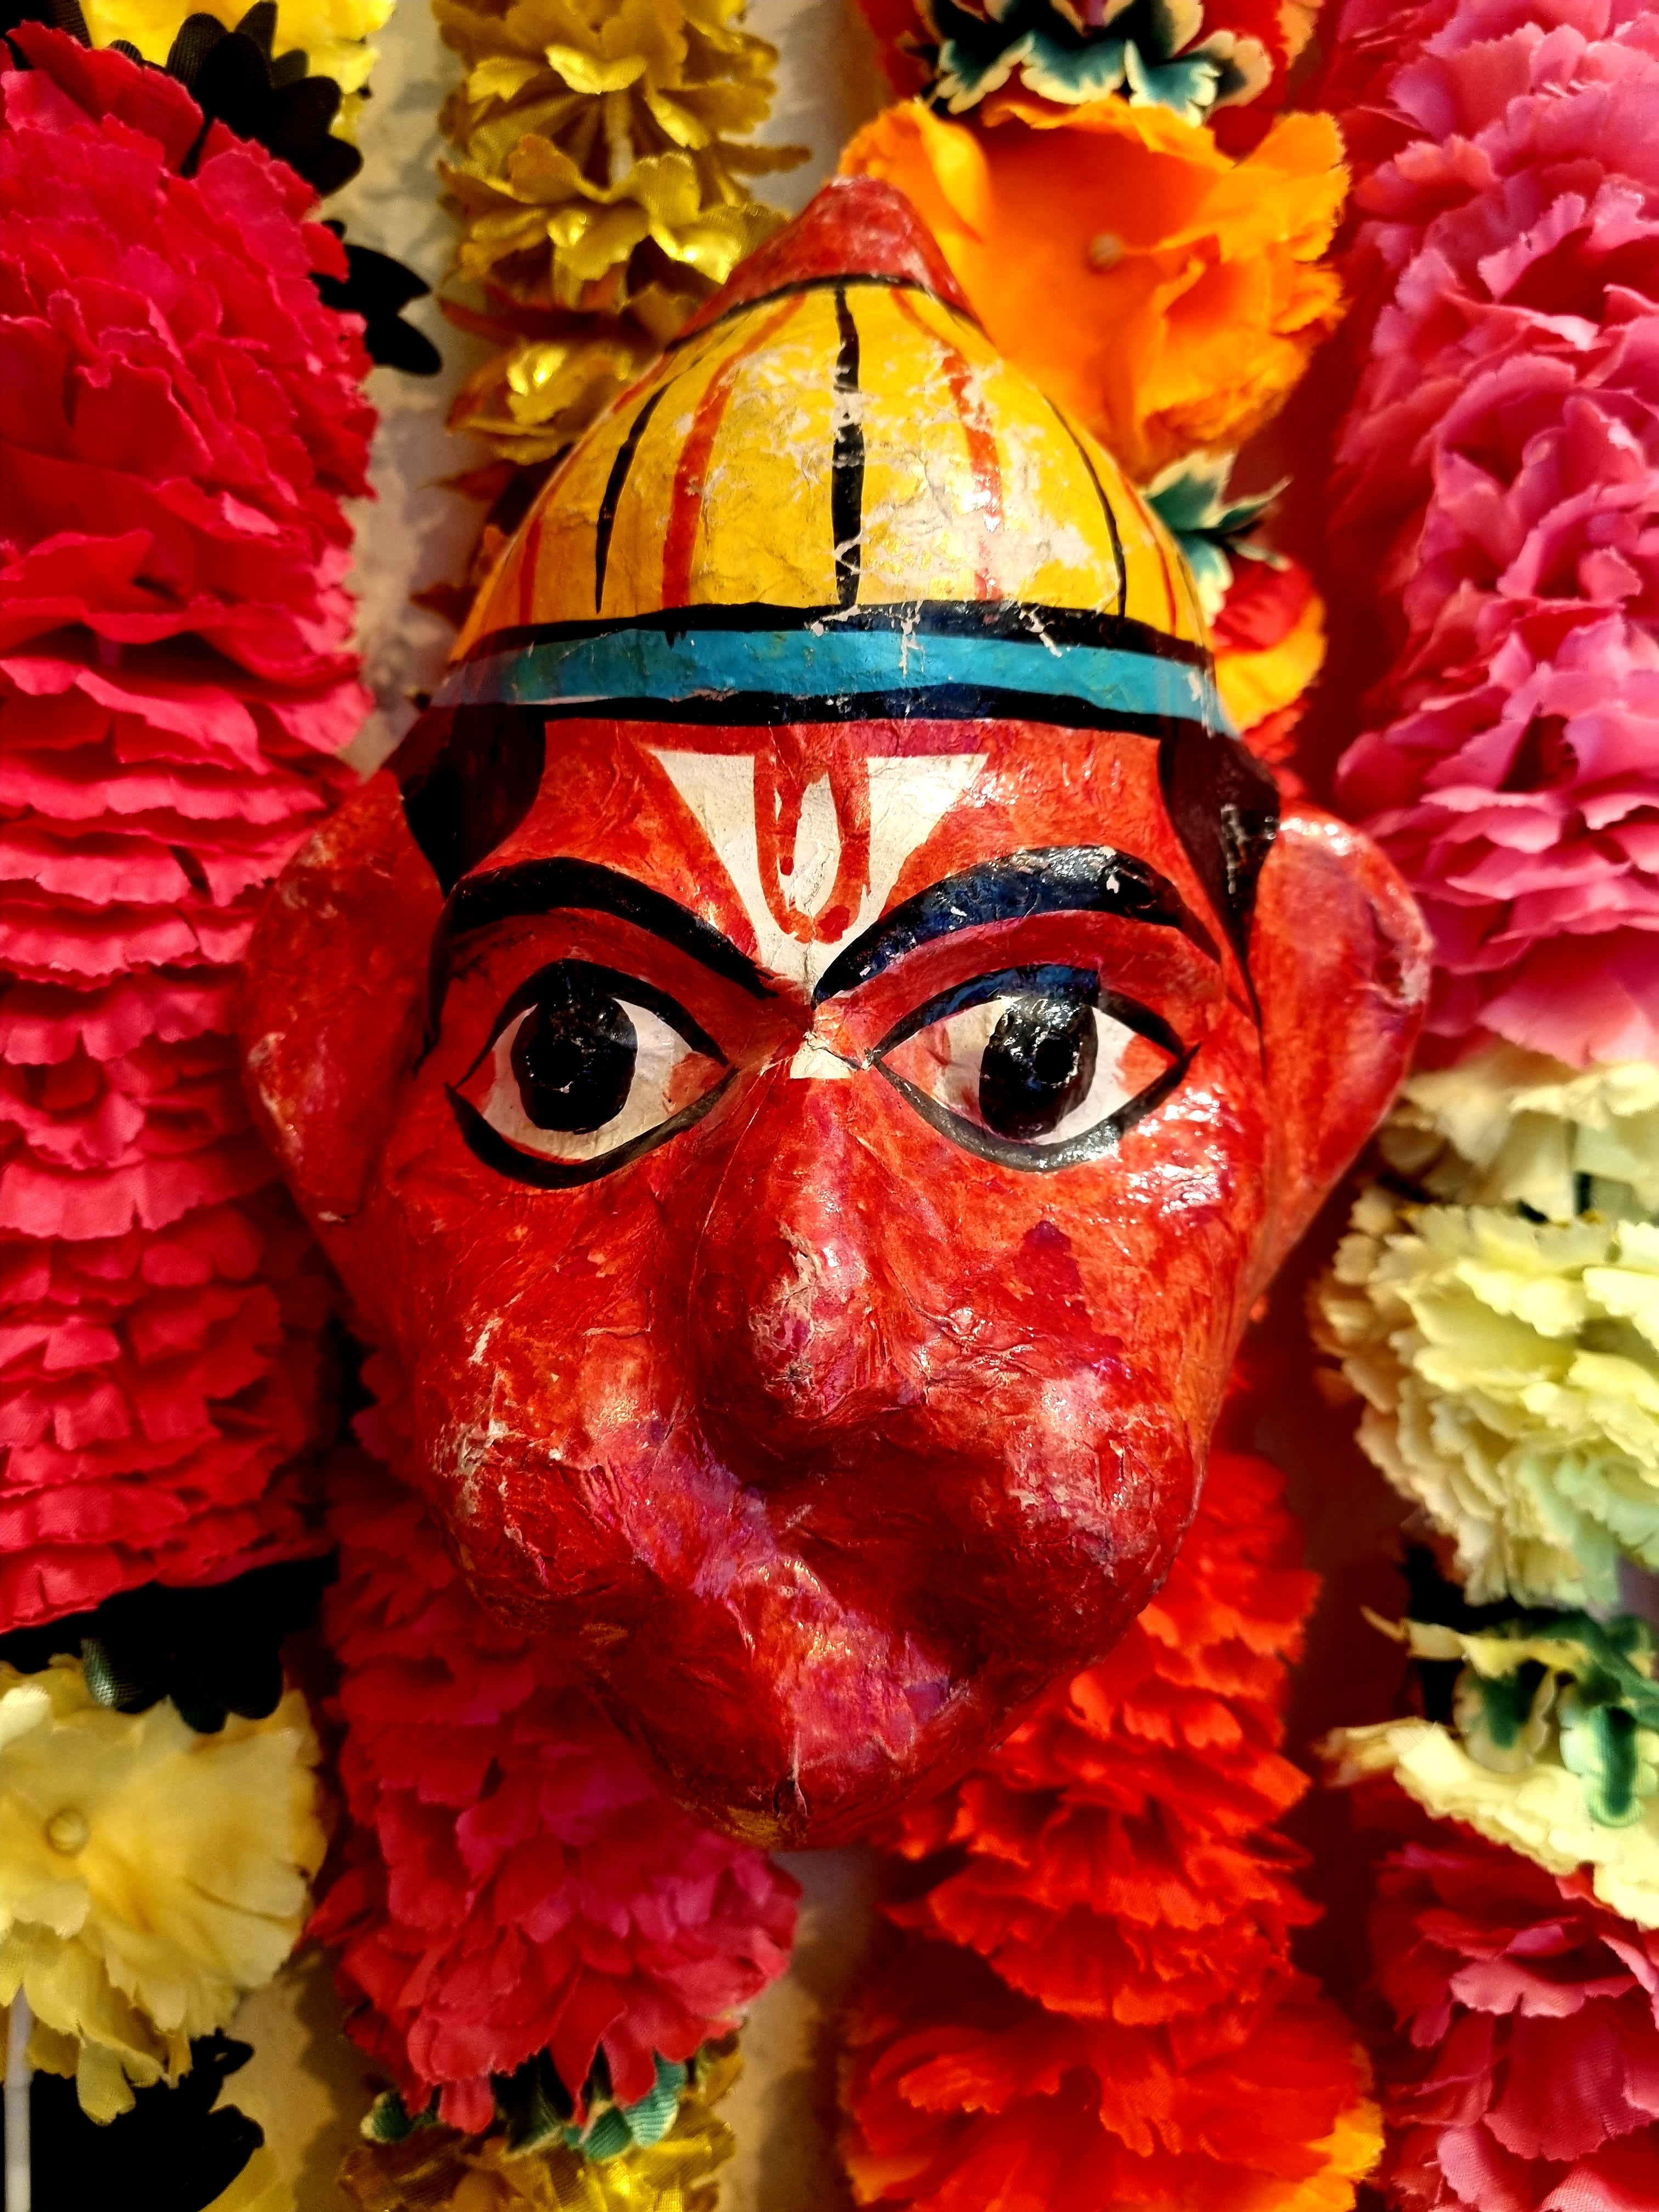 Indian paper mache masks